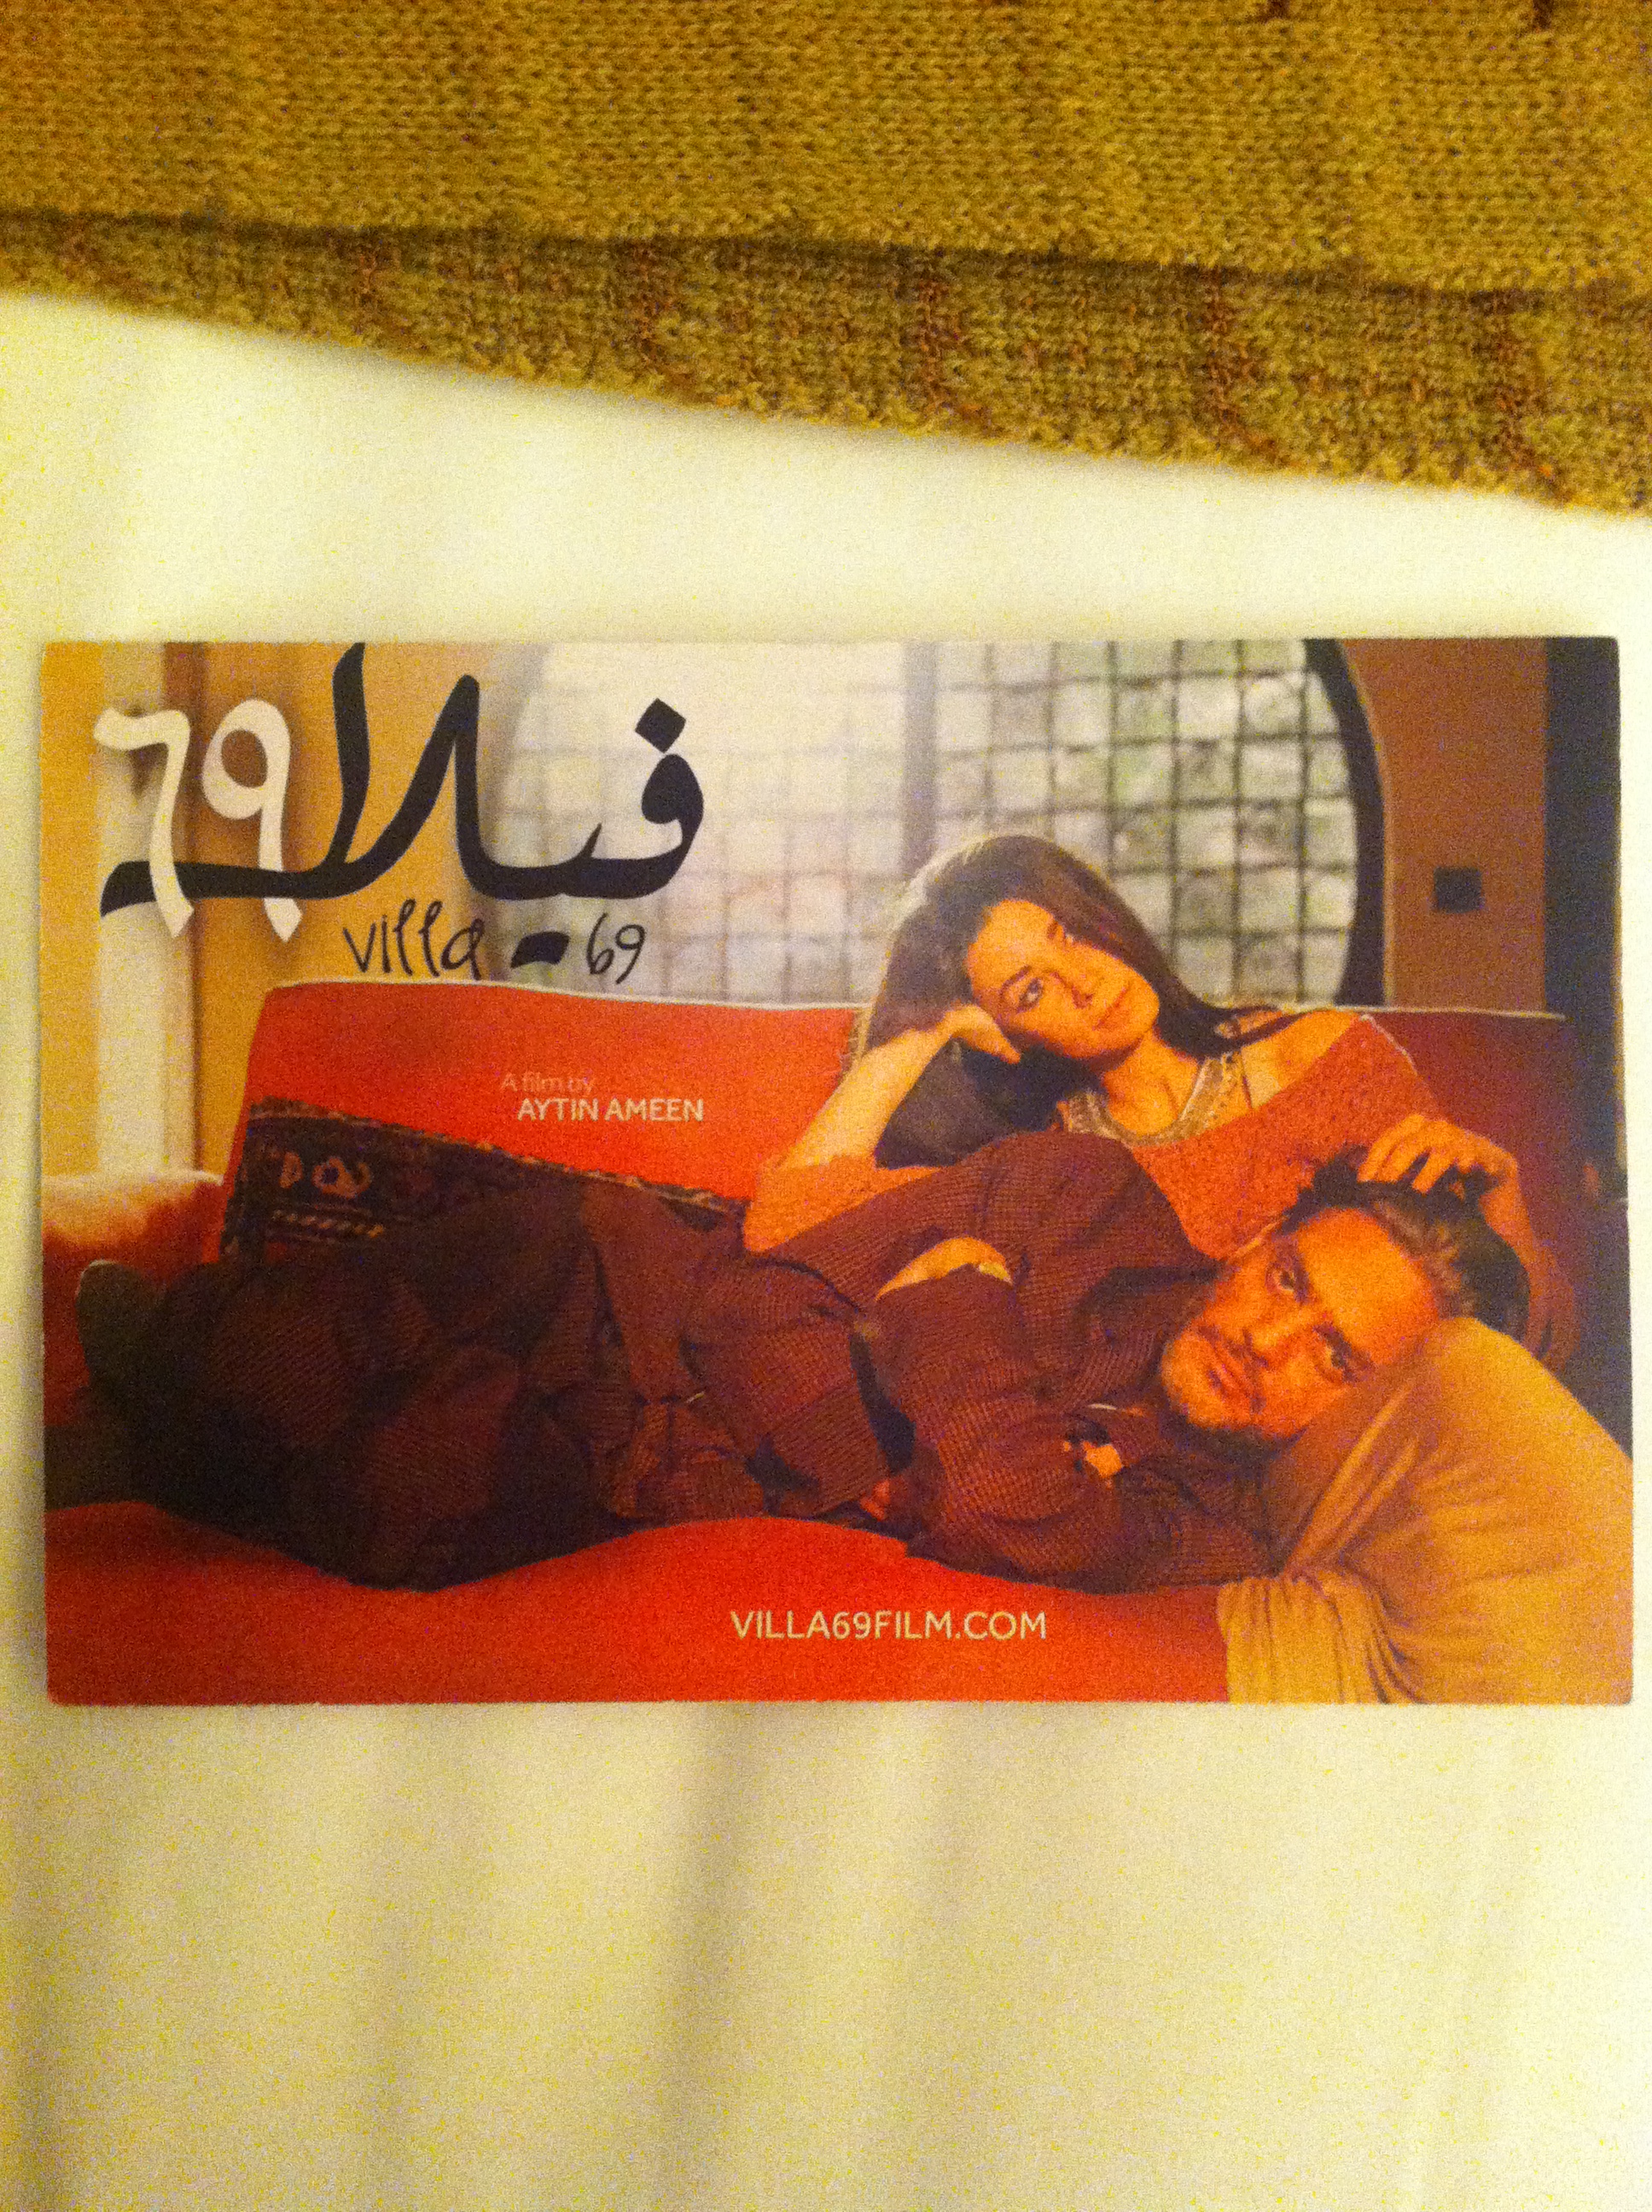 Villa 69 official movie poster (Directed by Ayten Amin)(2013)